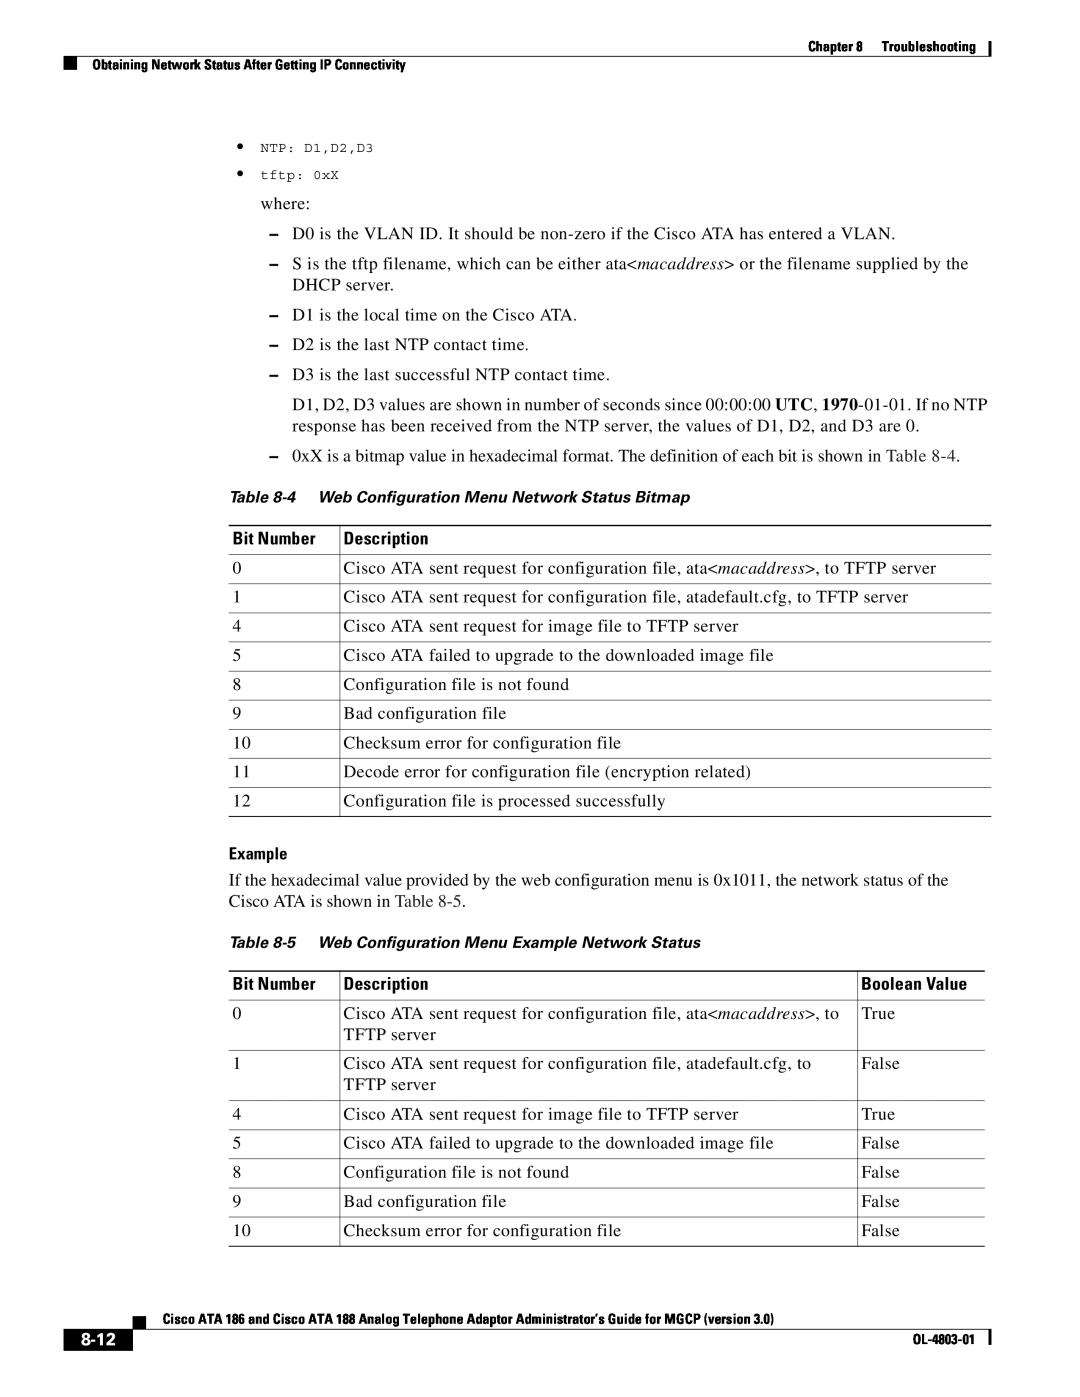 Cisco Systems ATA 186 manual 8-12, Bit Number, Description, Example 